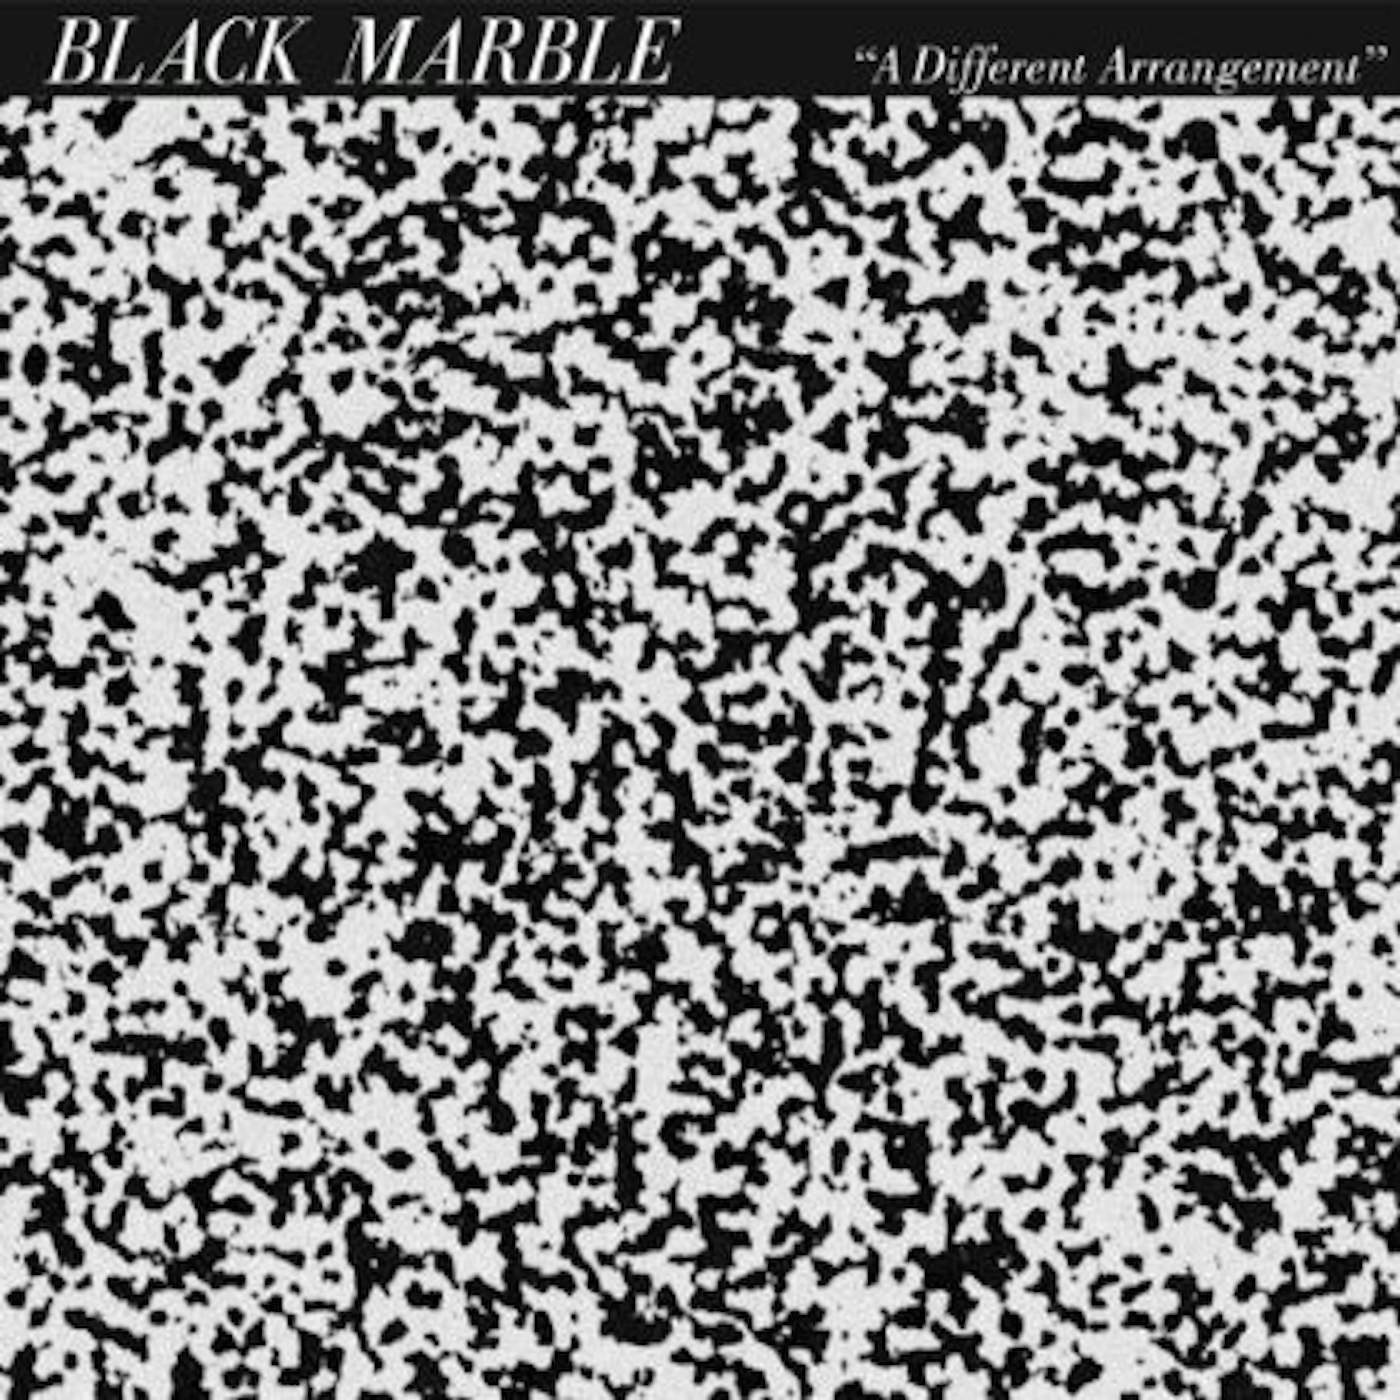 Black Marble DIFFERENT ARRANGEMENT Vinyl Record